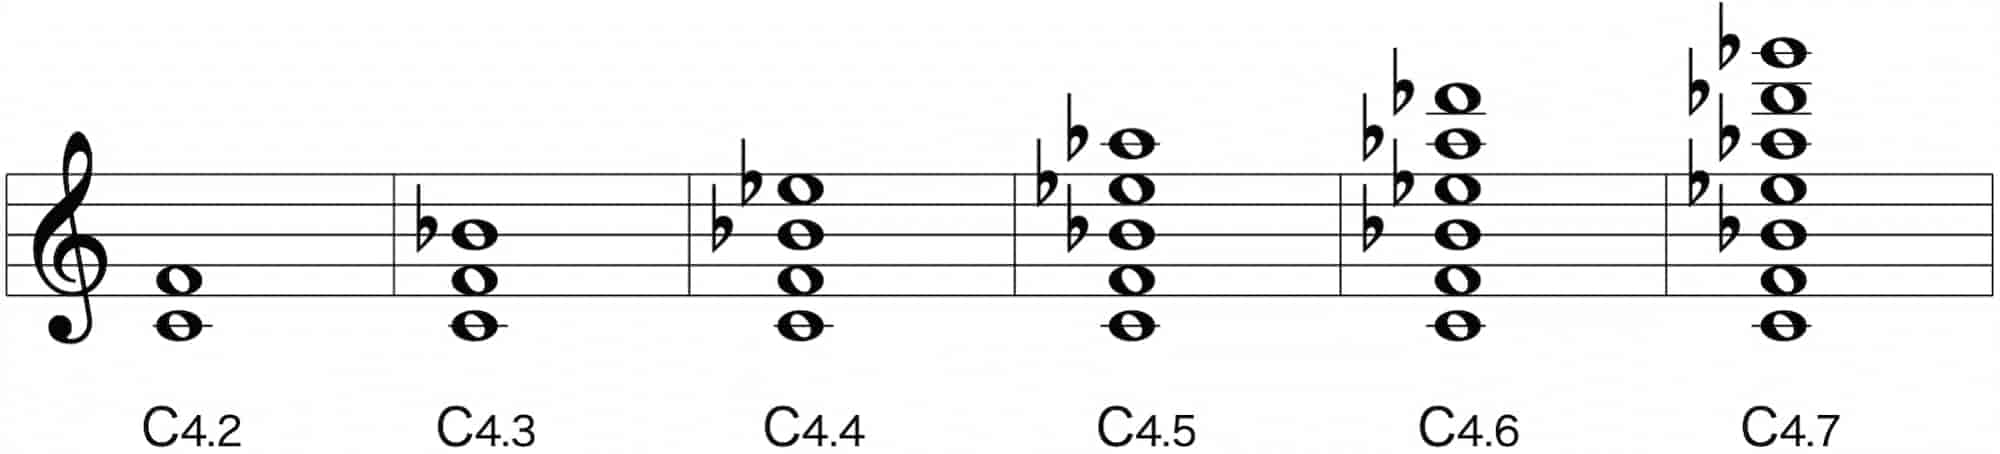 perfect 4th interval built chordの表記法 構成音が増えるごとにC4．2、C4．3、C4．4と表記する　C4．7で最大7音